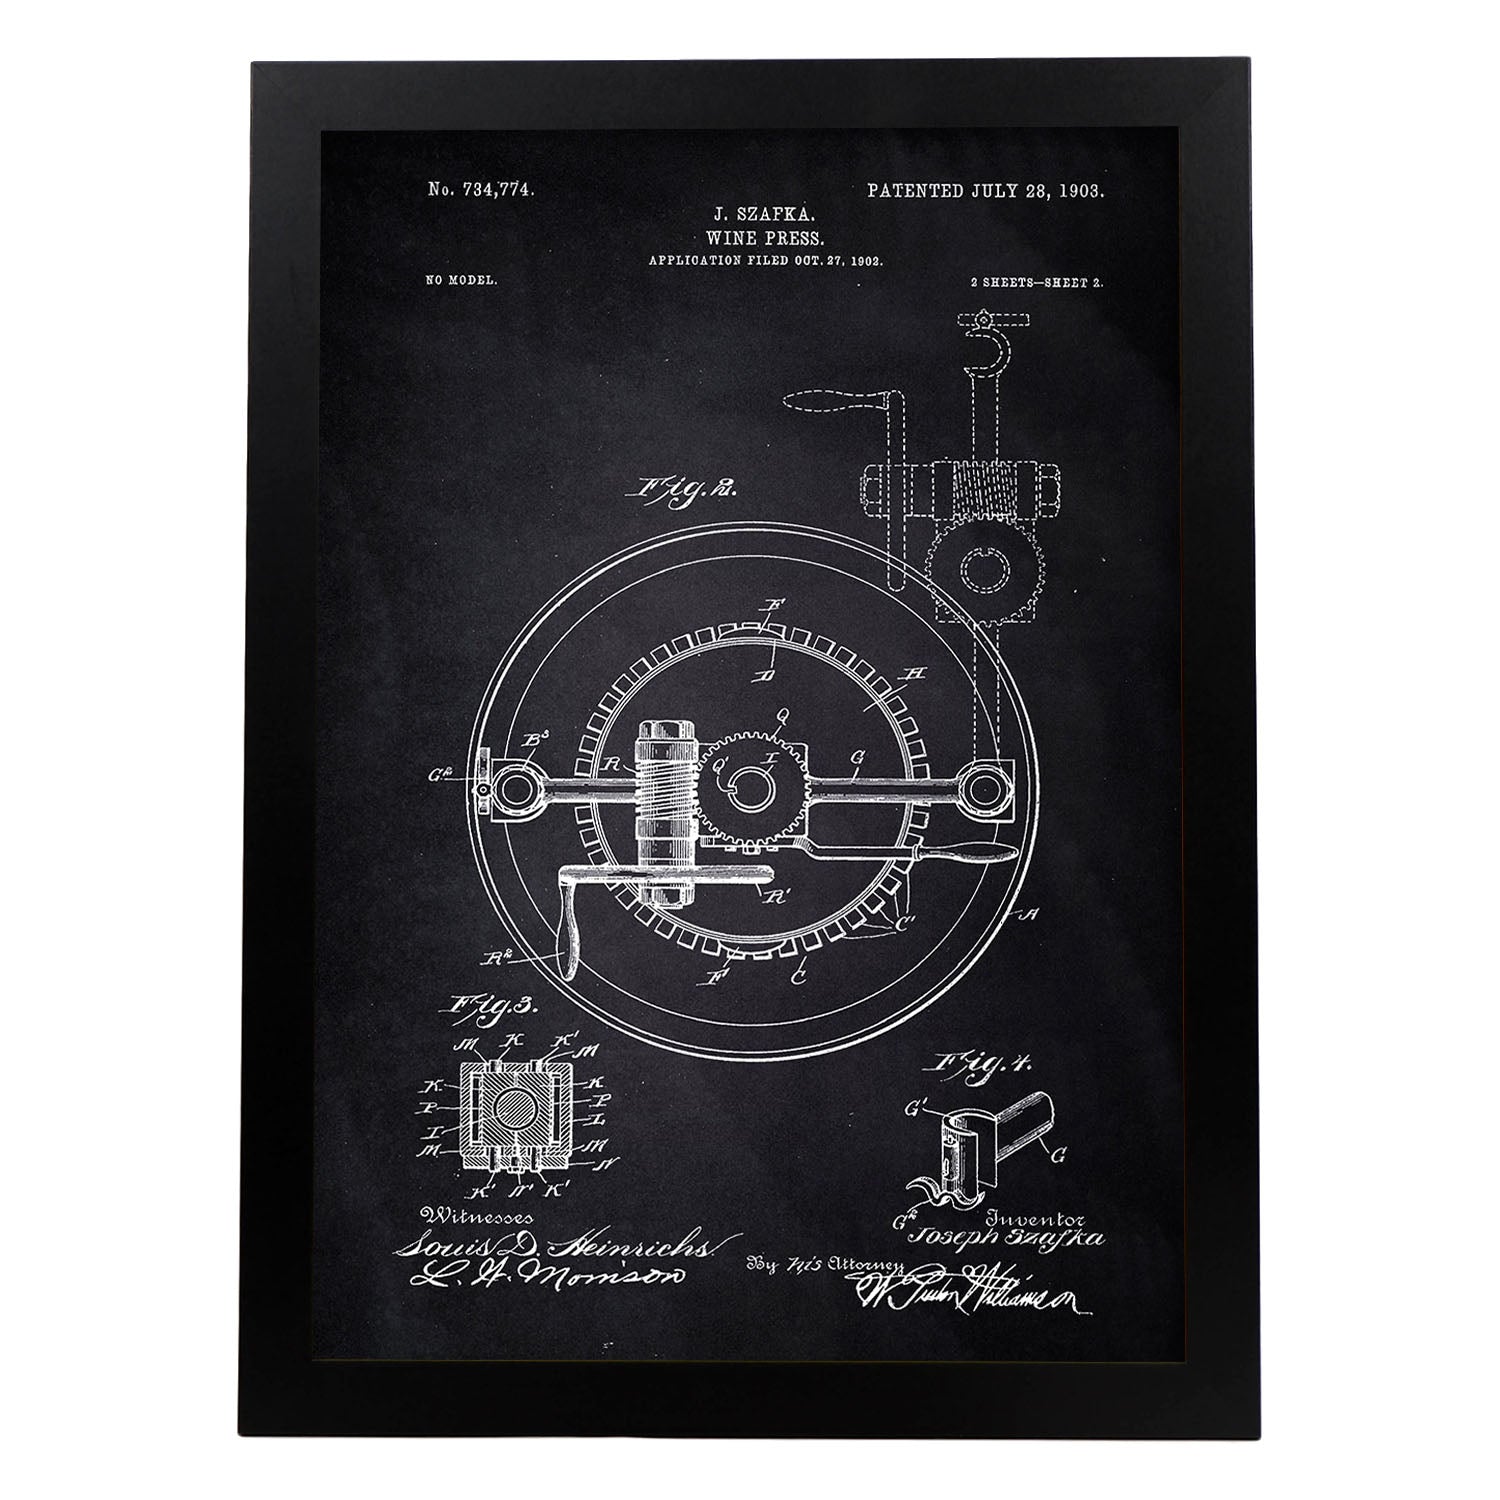 Poster con patente de Prensadora de vino 2. Lámina con diseño de patente antigua-Artwork-Nacnic-A4-Marco Negro-Nacnic Estudio SL